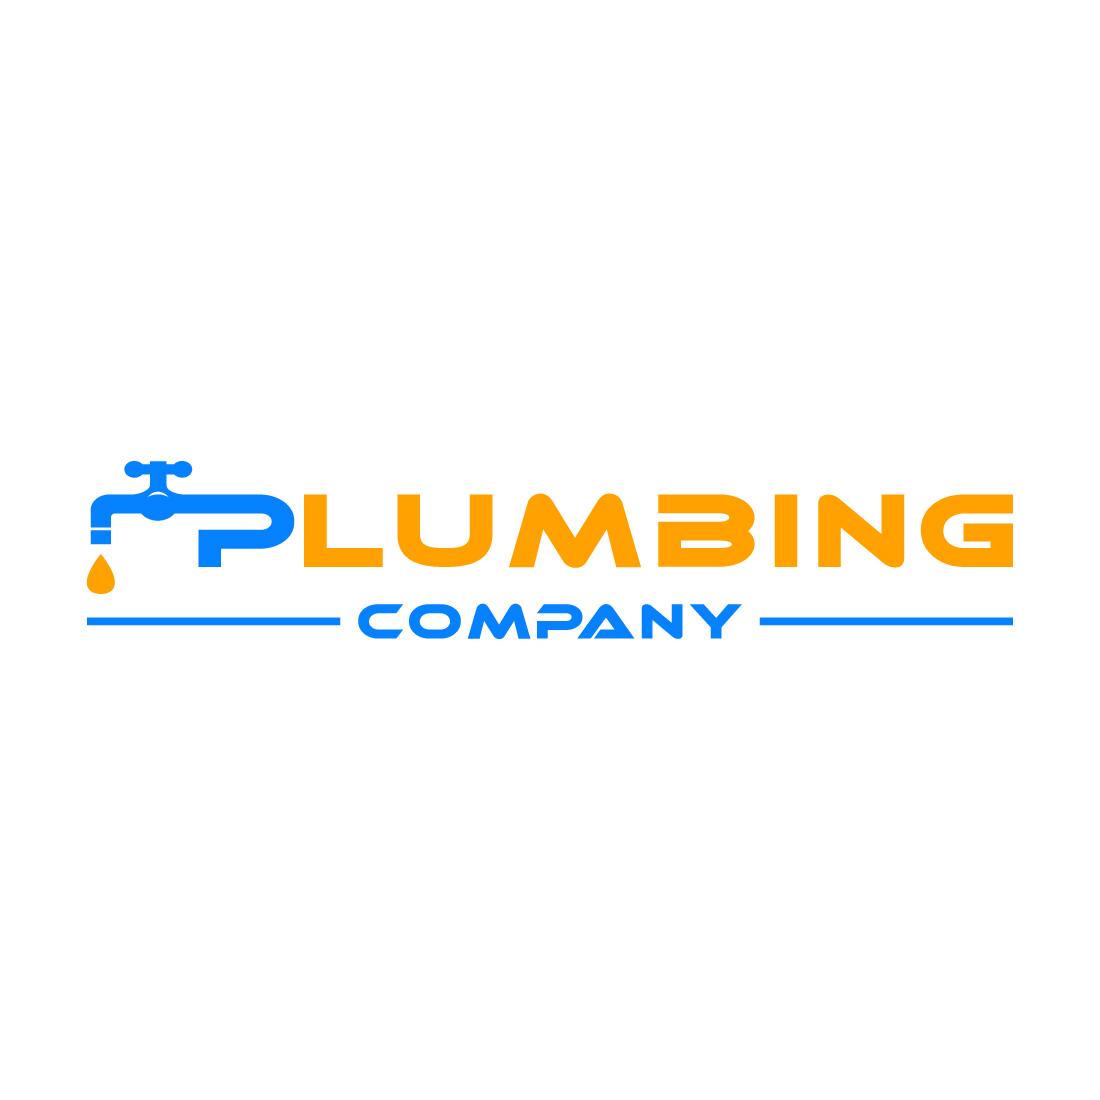 Plumbing company logo design, Vector design template preview image.